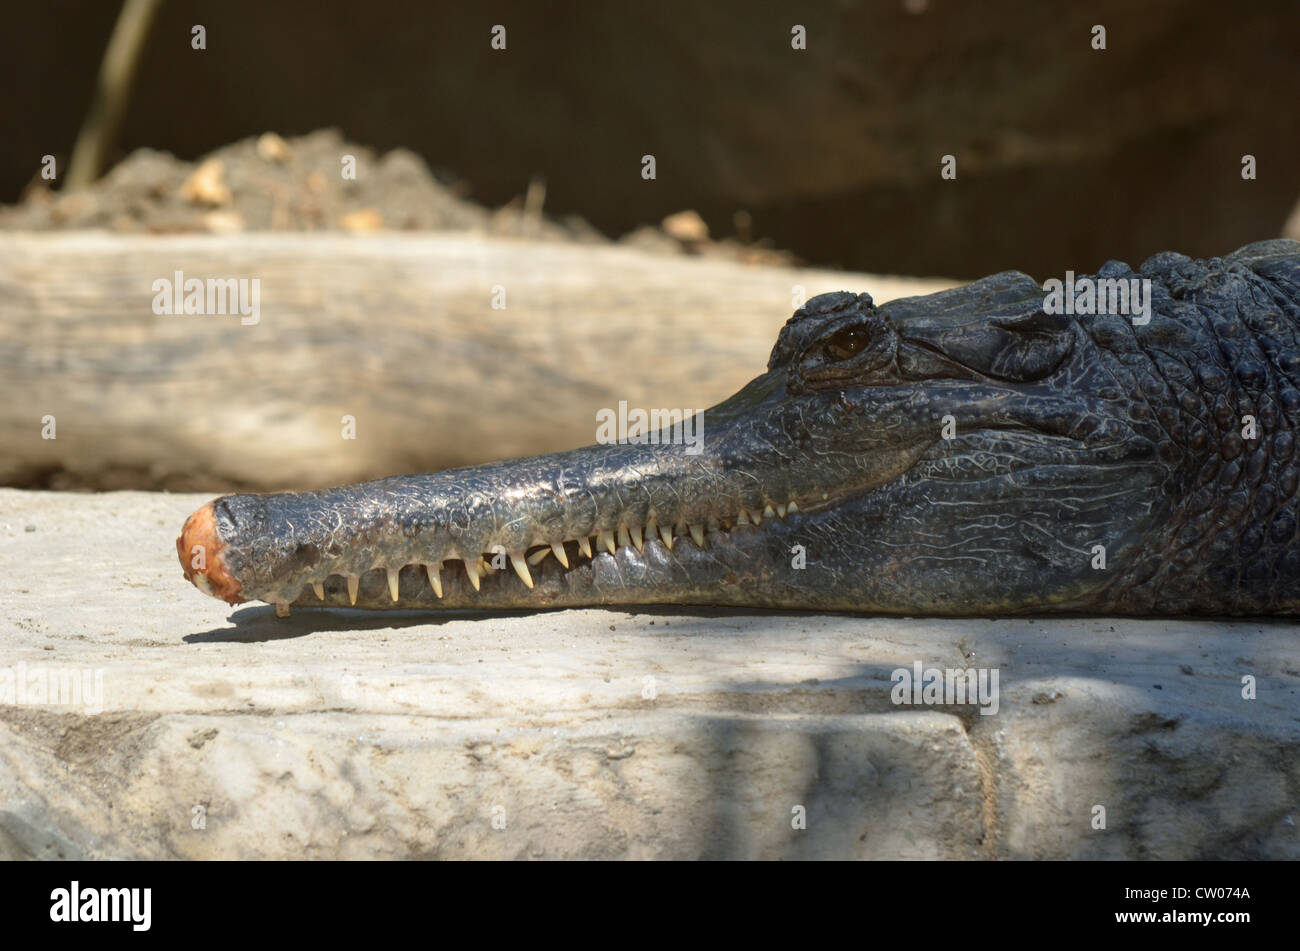 Gharial or Gavial Crocodile basking Stock Photo